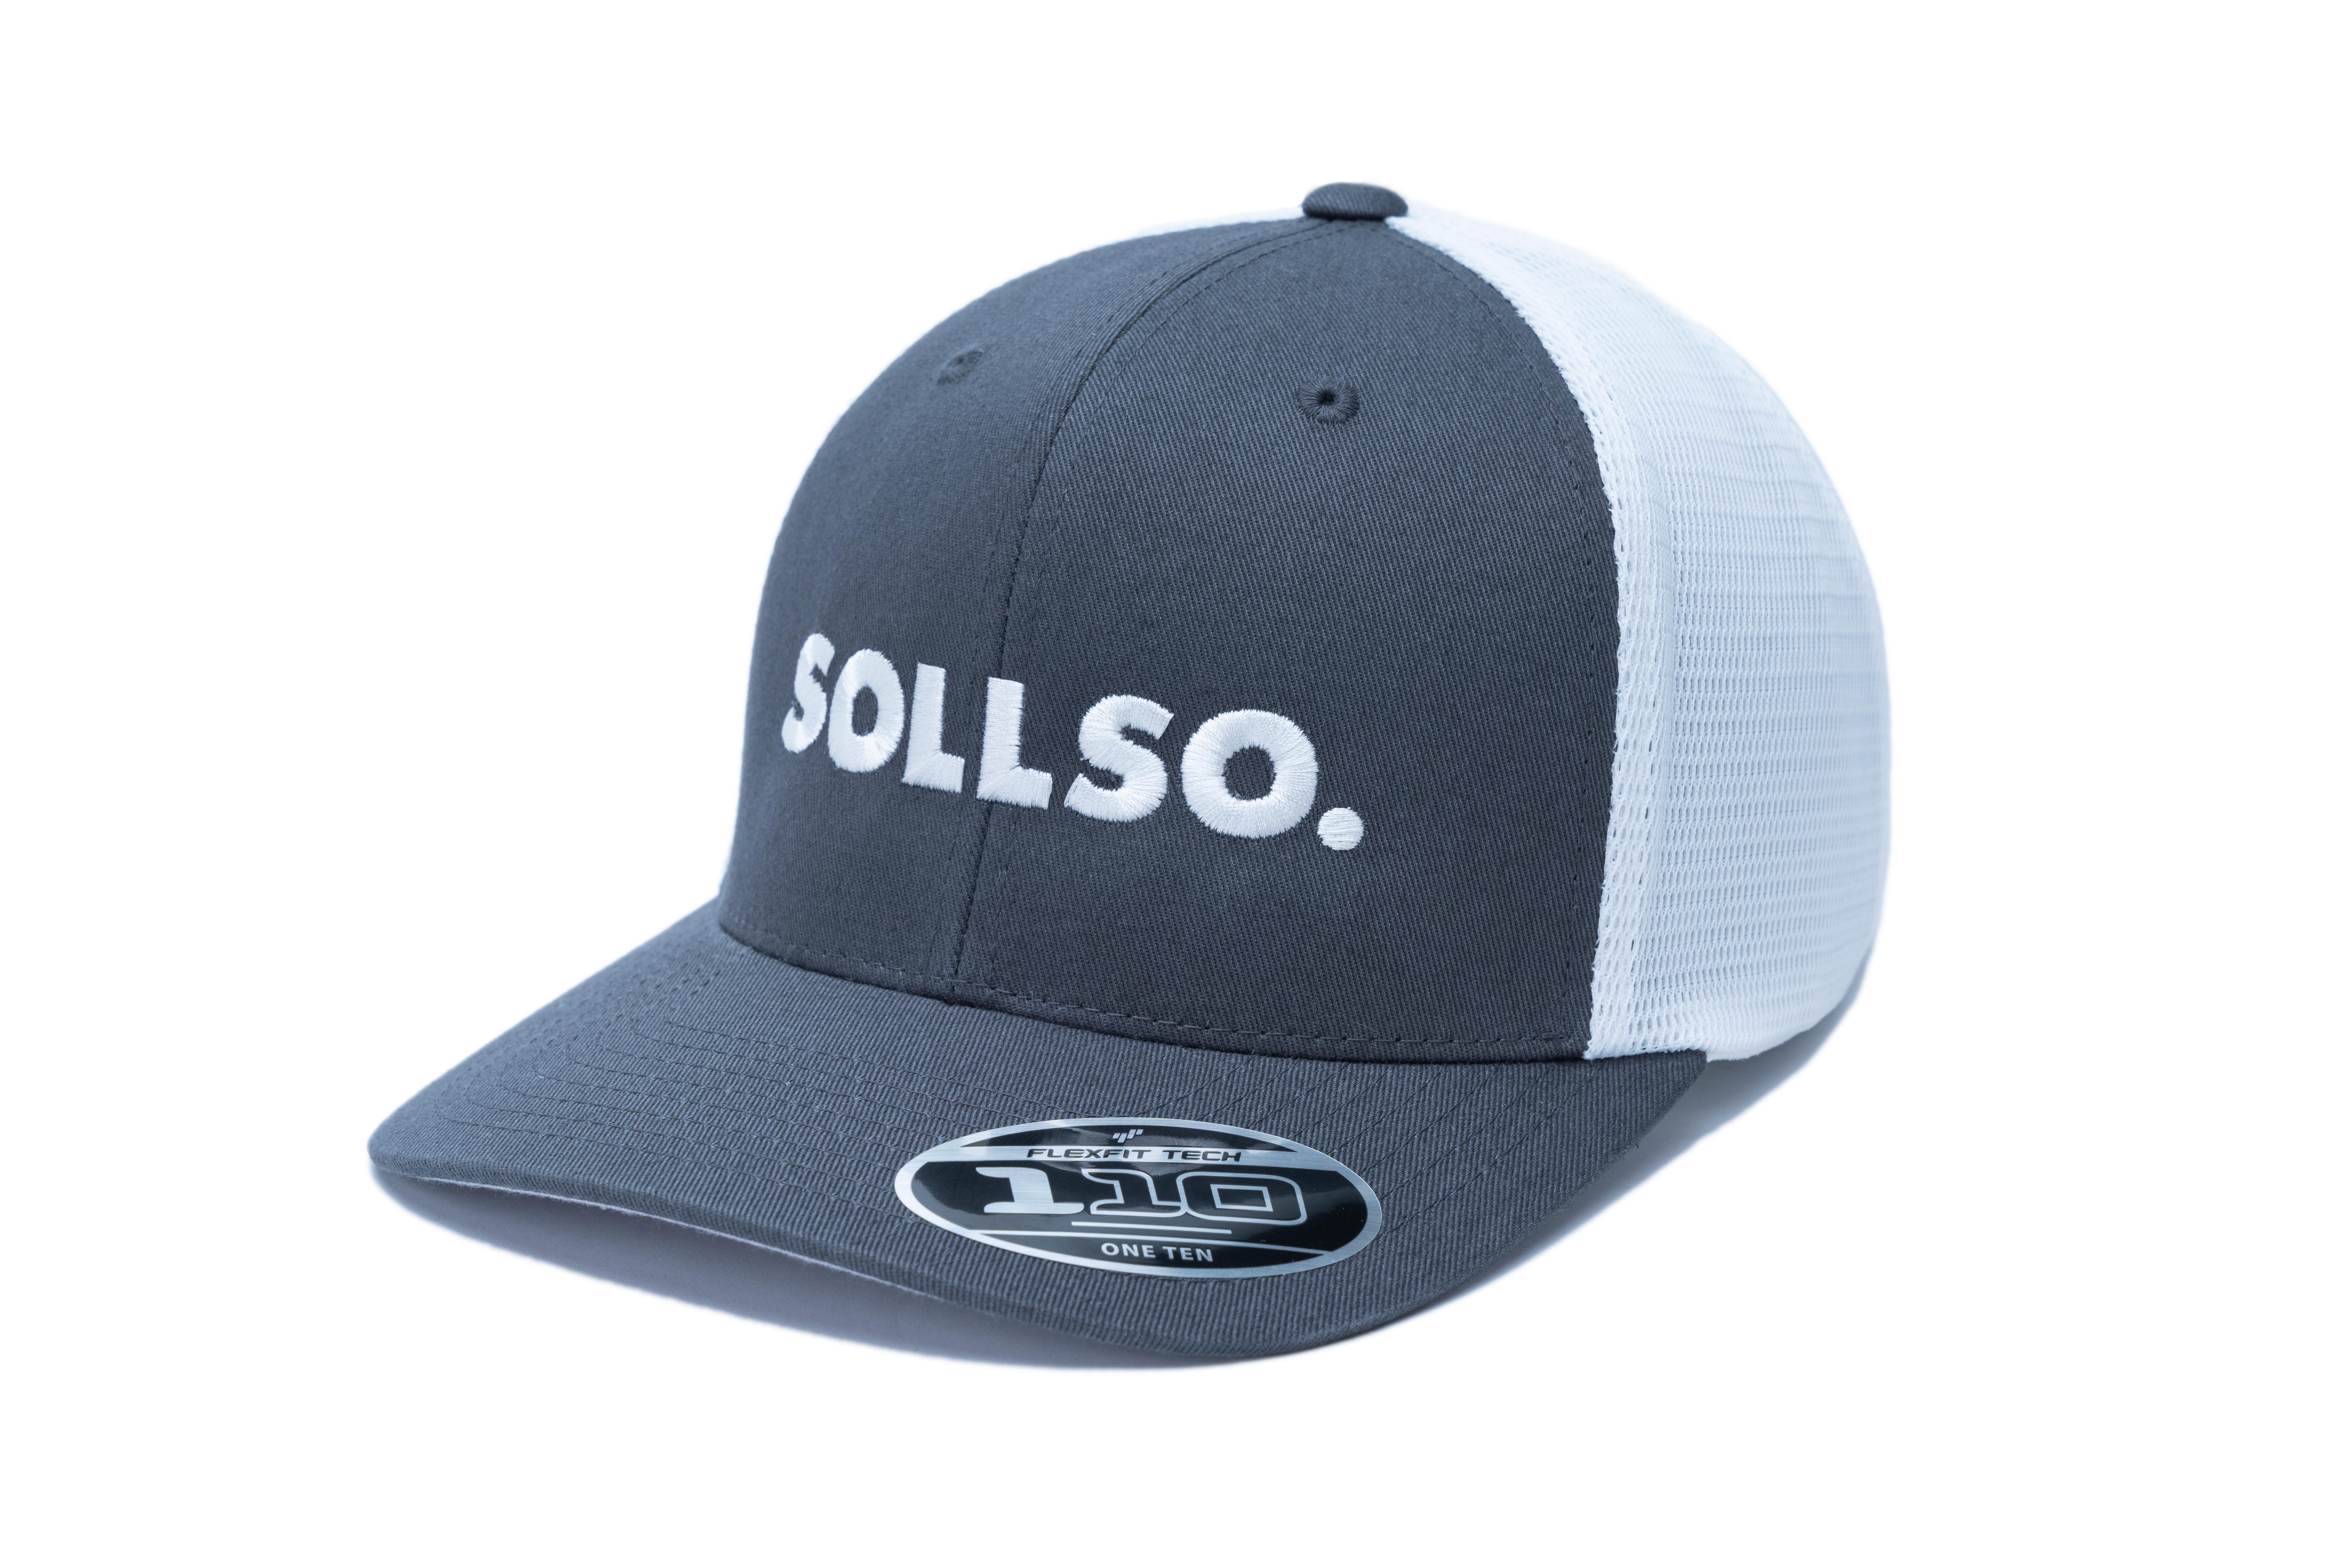 SOLLSO. Mesh 2-Tone Cap, Charcoal-White